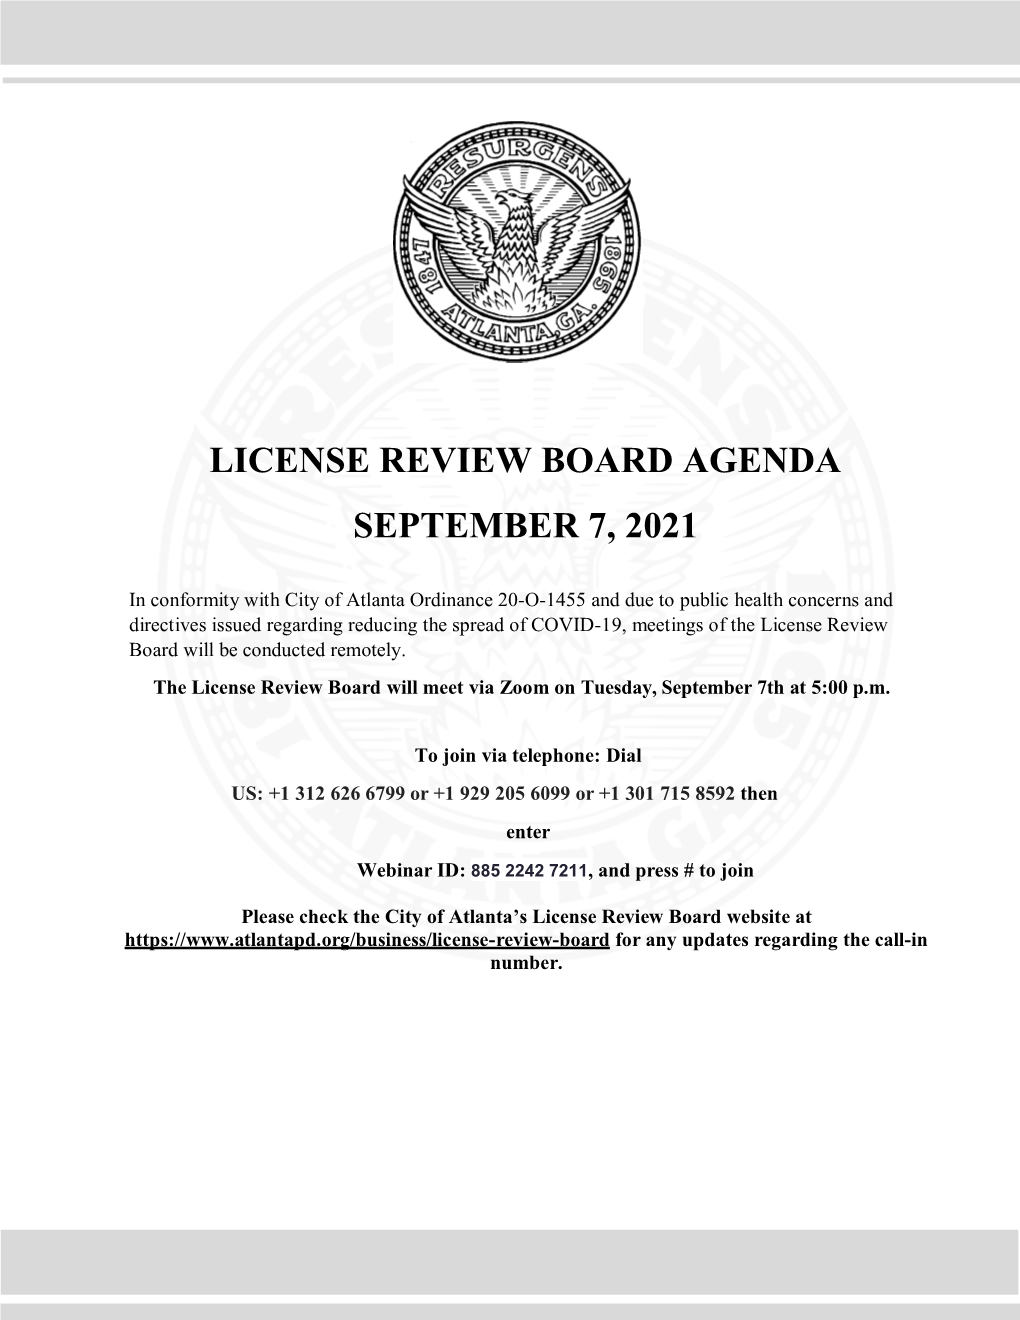 License Review Board Agenda September 7, 2021